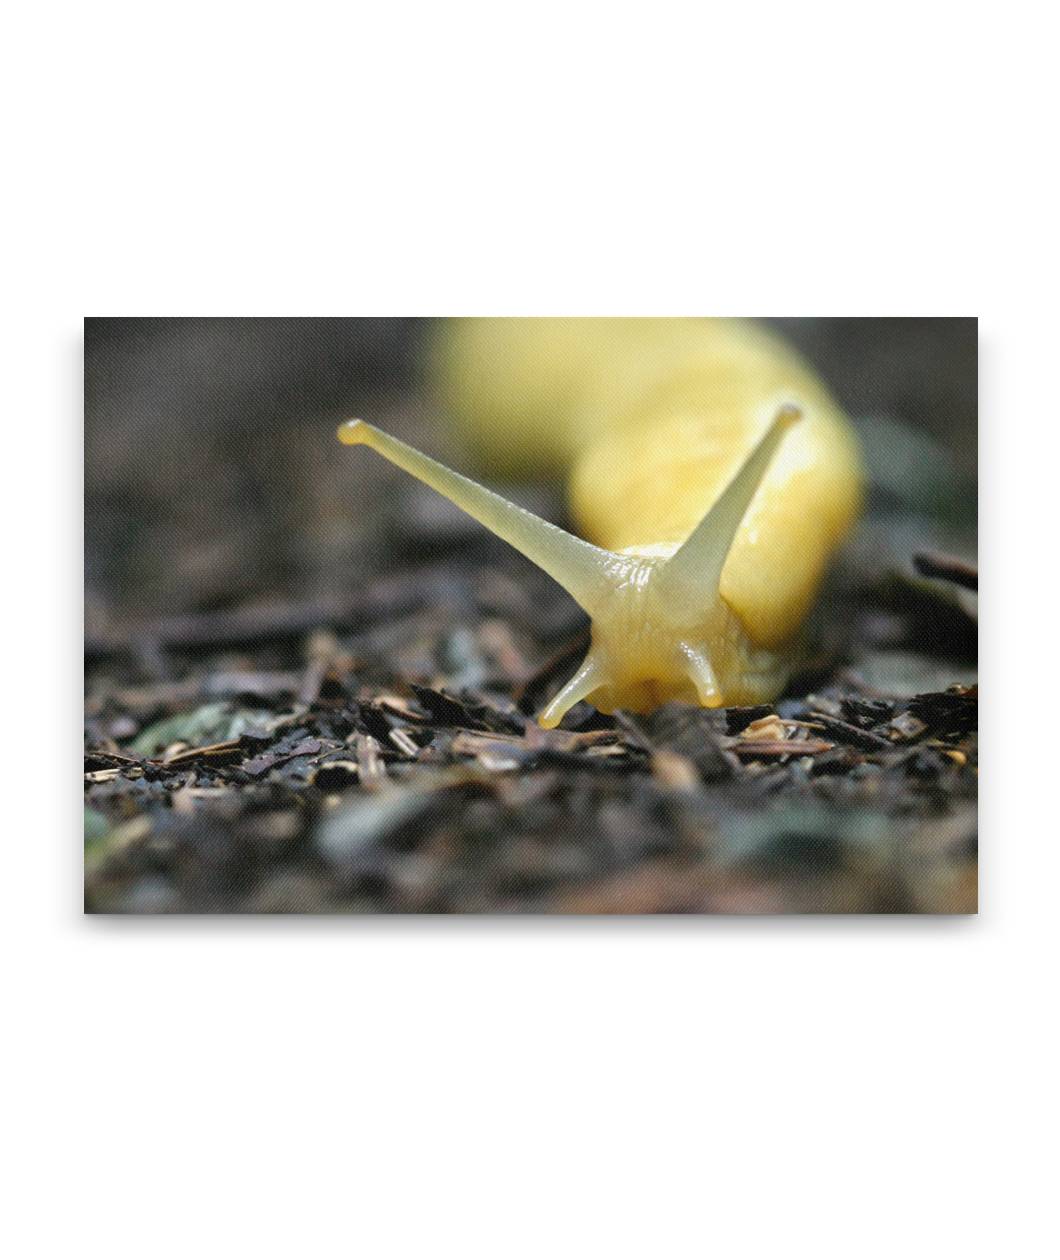 Banana Slug on Forest Floor, Prairie Creek Redwoods State Park, California